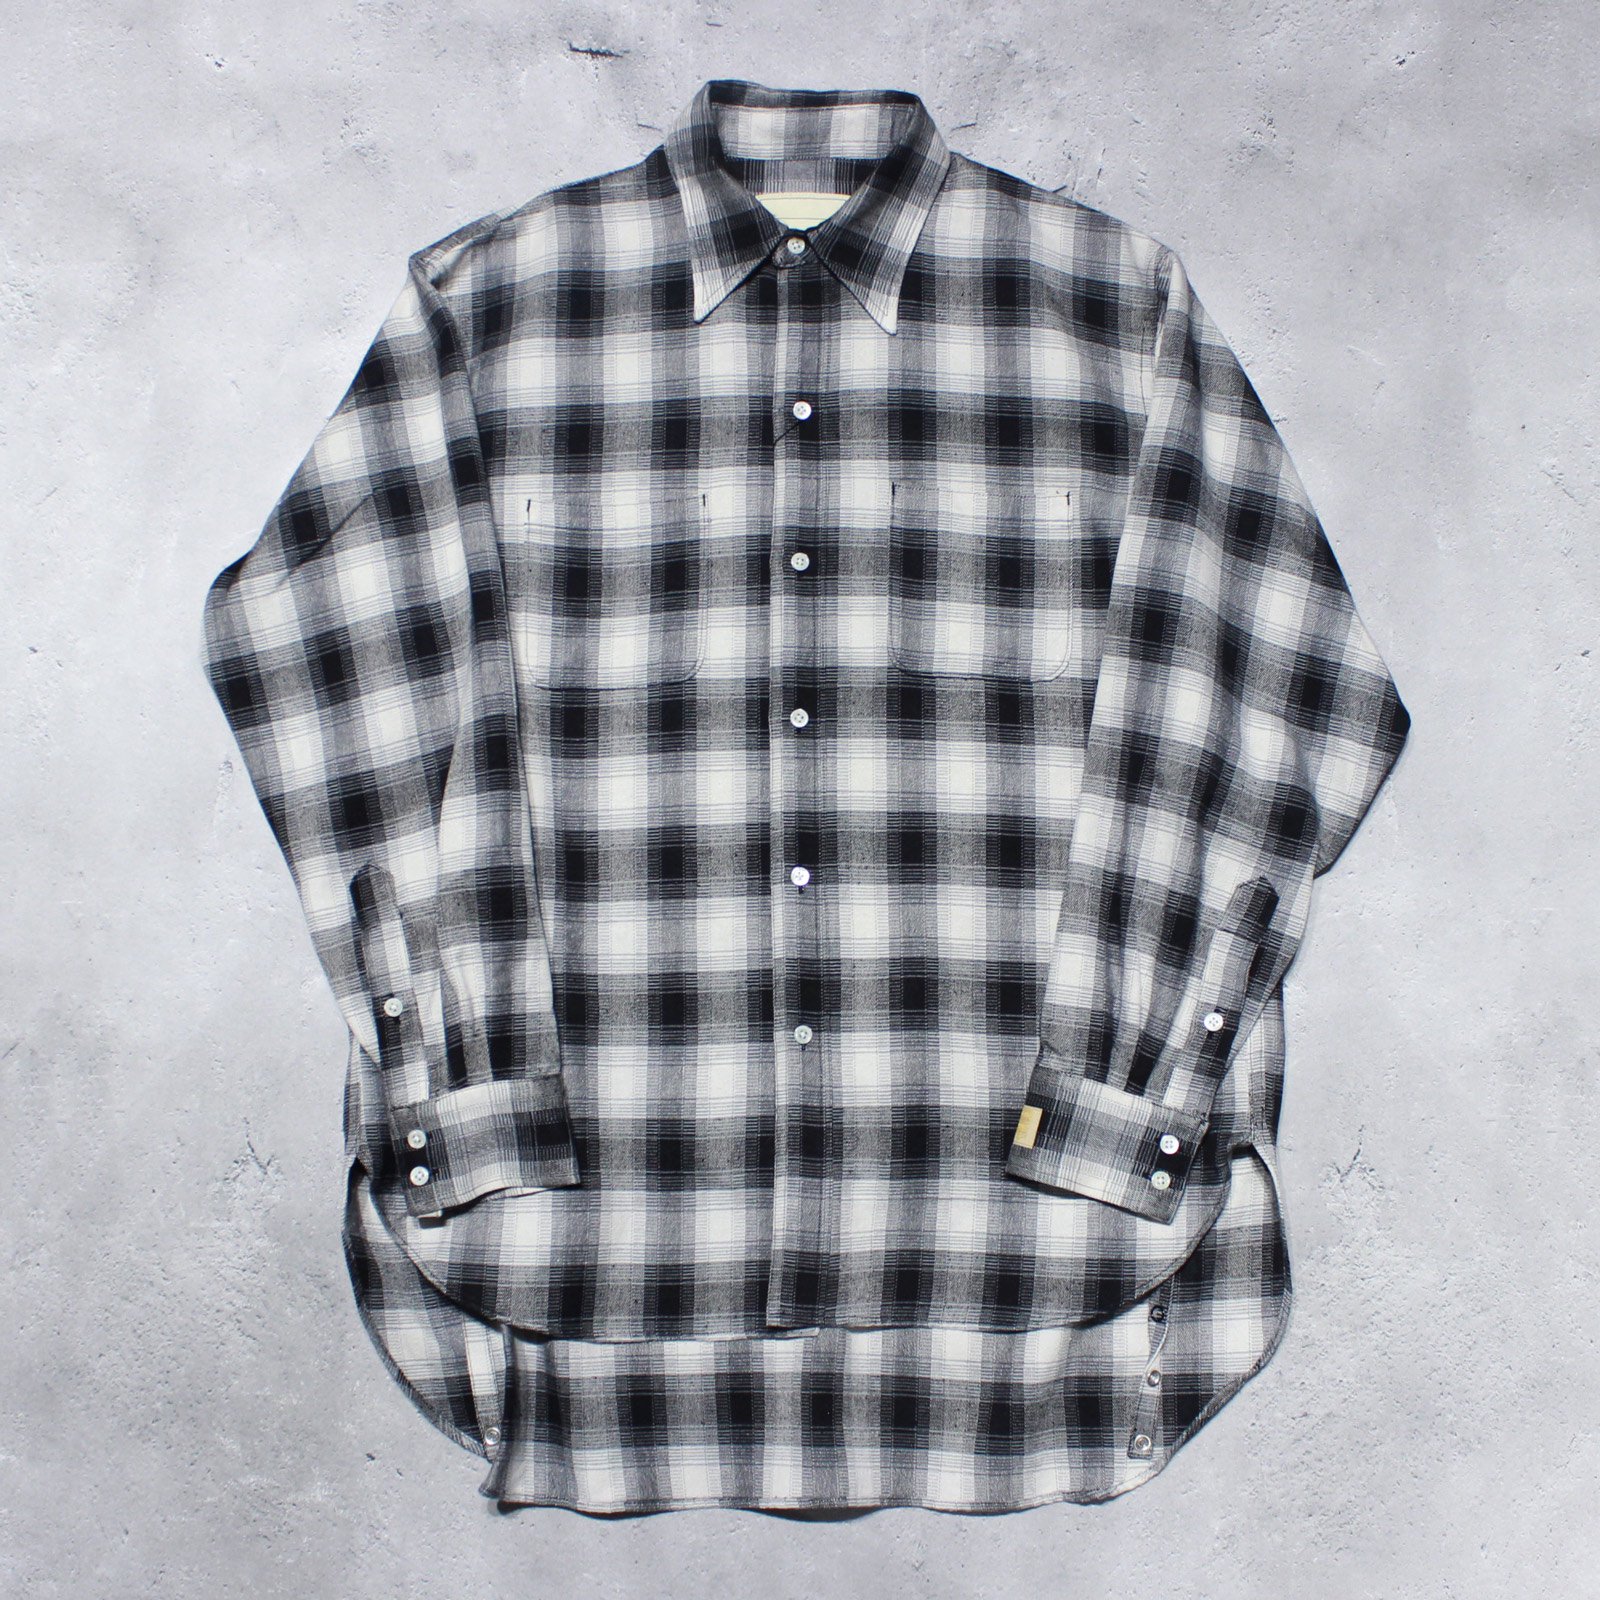 SEVESKIGSilk flannel Shirt(Black)